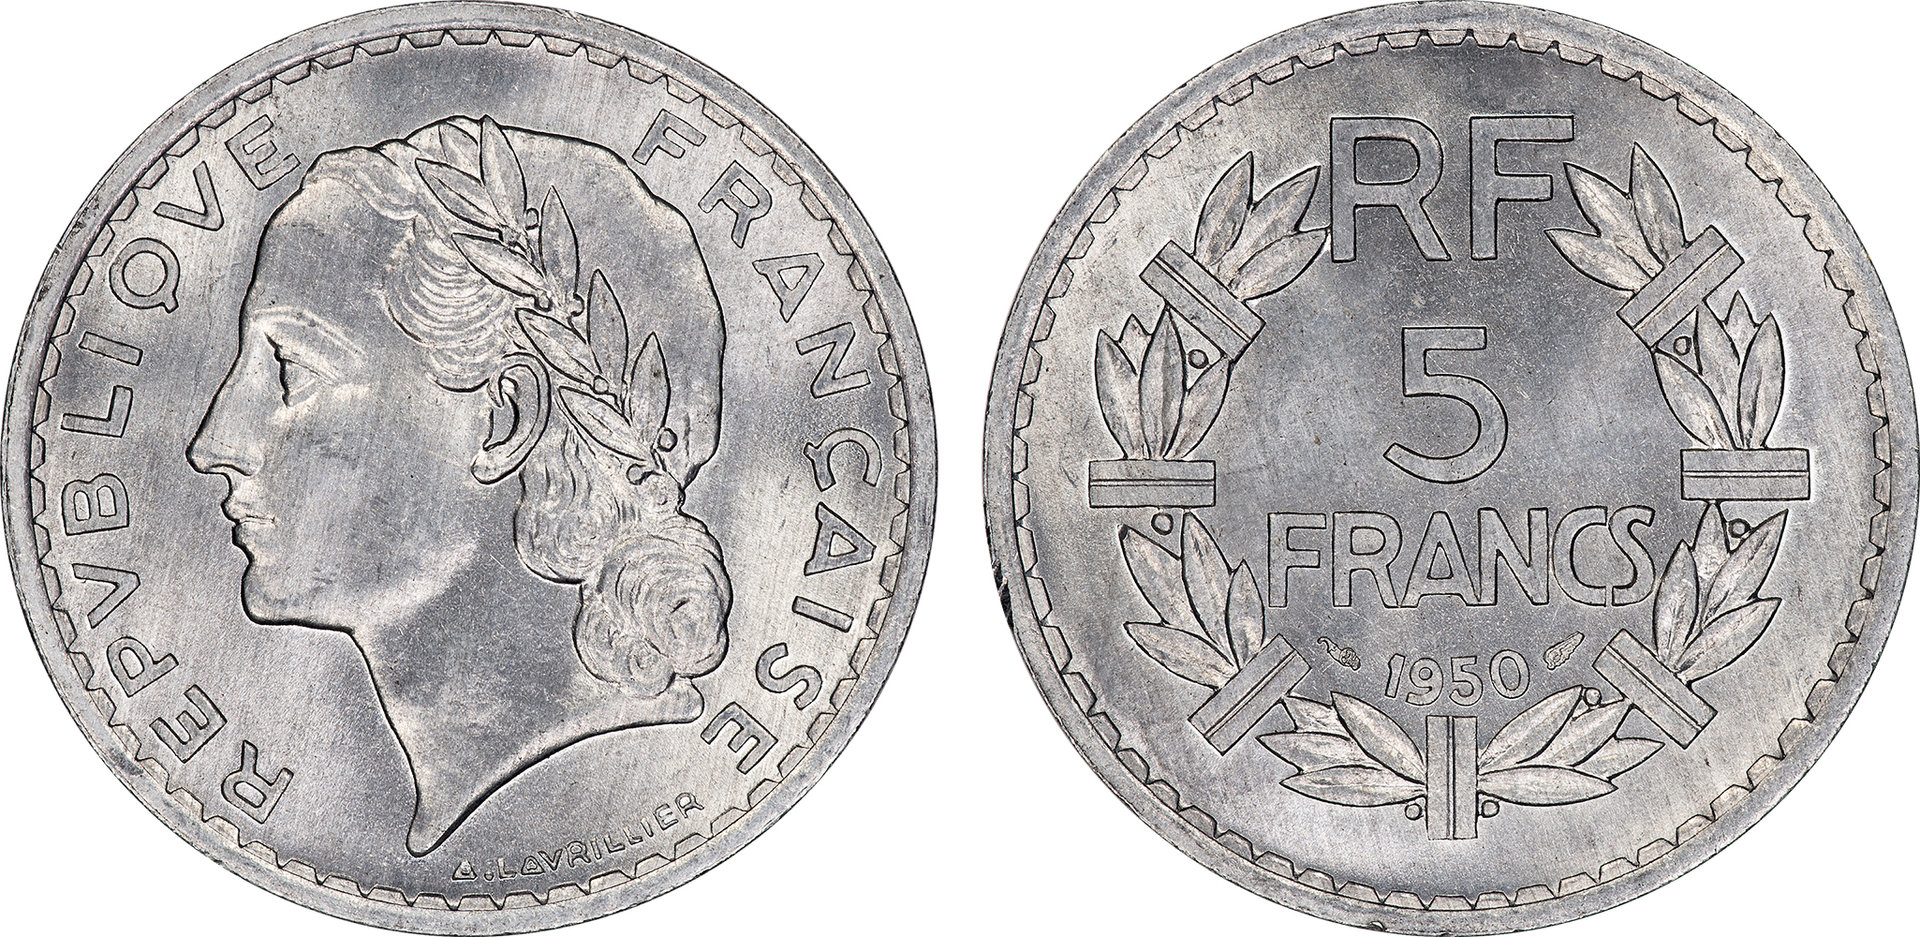 France - 1950 5 Francs.jpg